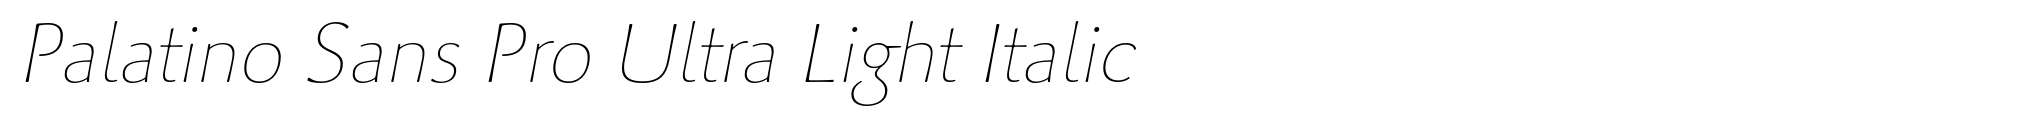 Palatino Sans Pro Ultra Light Italic image